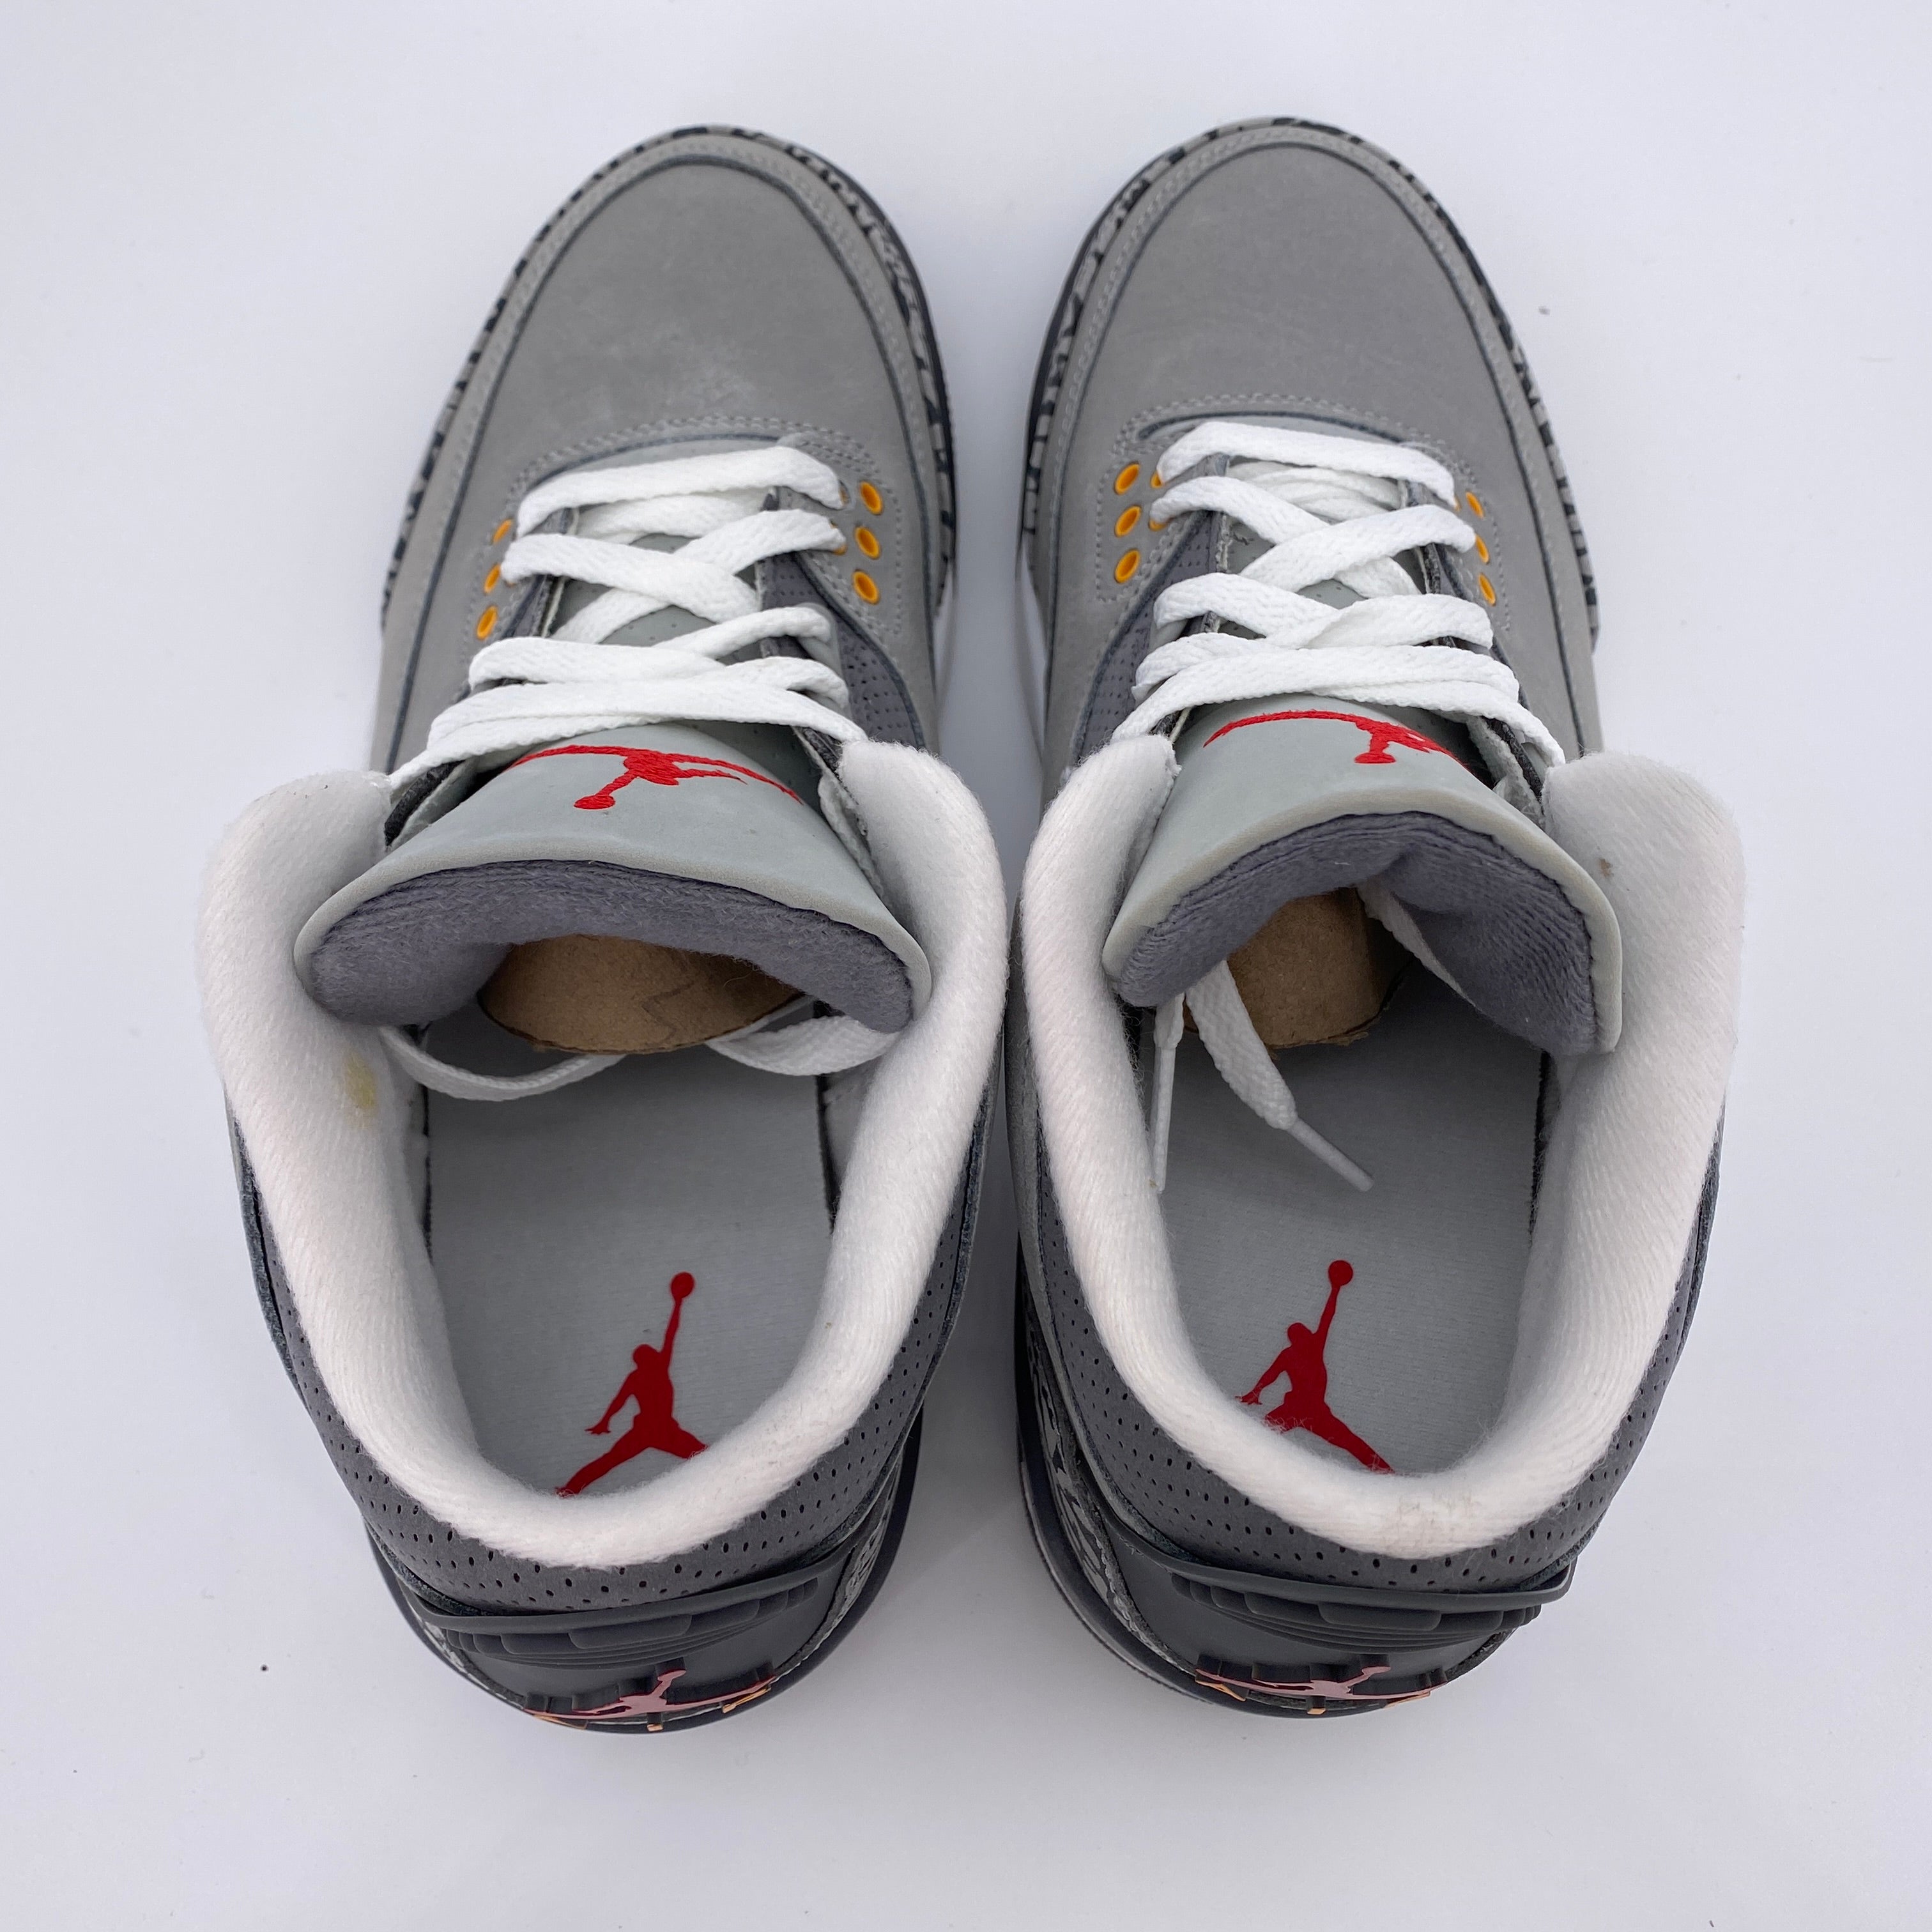 Air Jordan 3 Retro "Cool Grey" 2021 New Size 8